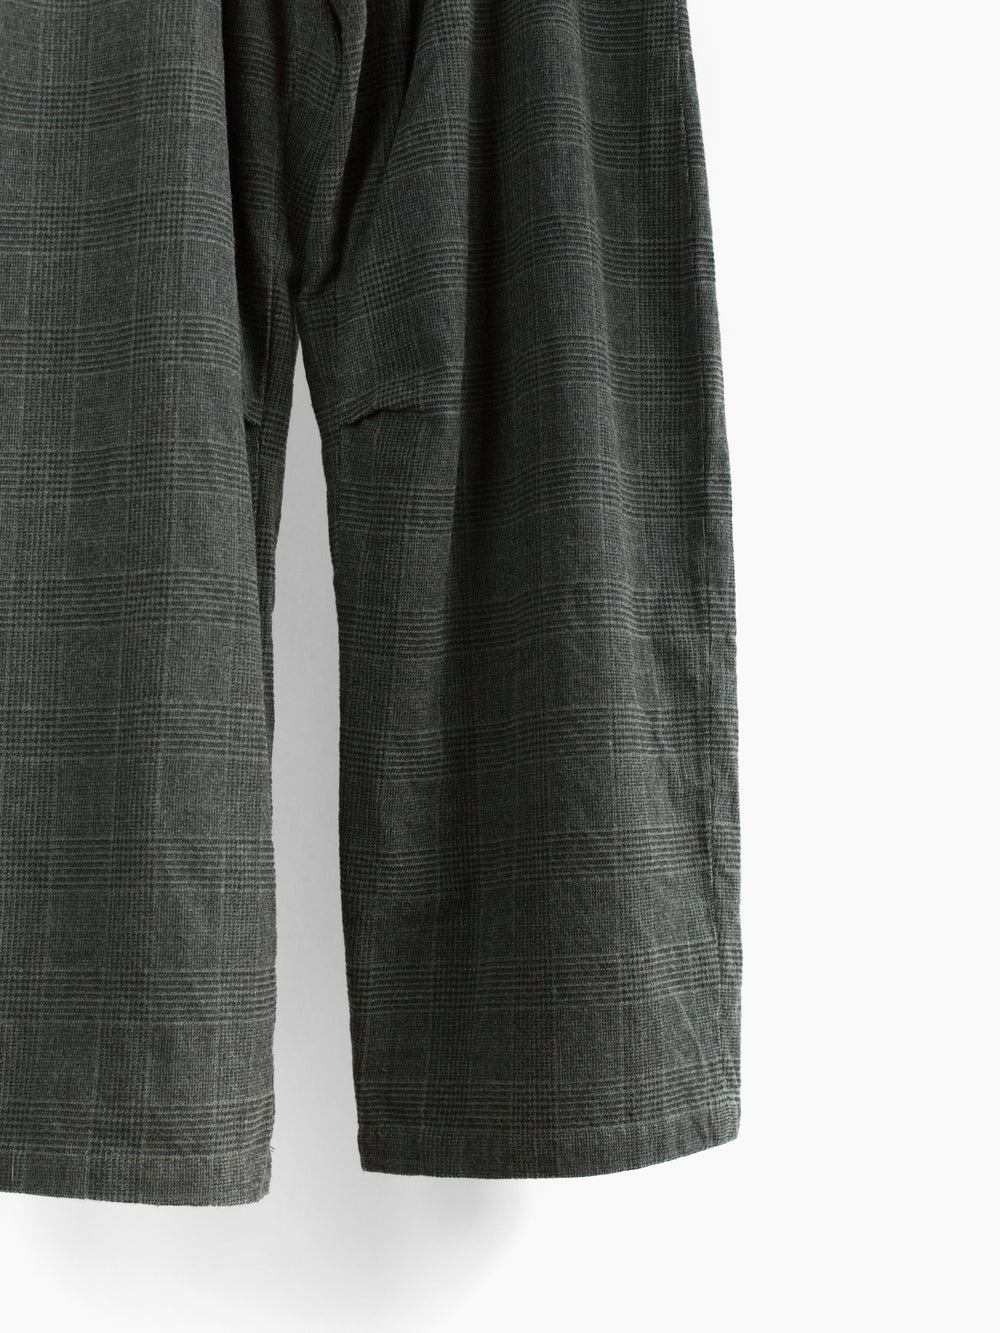 Shinichiro Arakawa 90s Double Layered Pleated Trousers